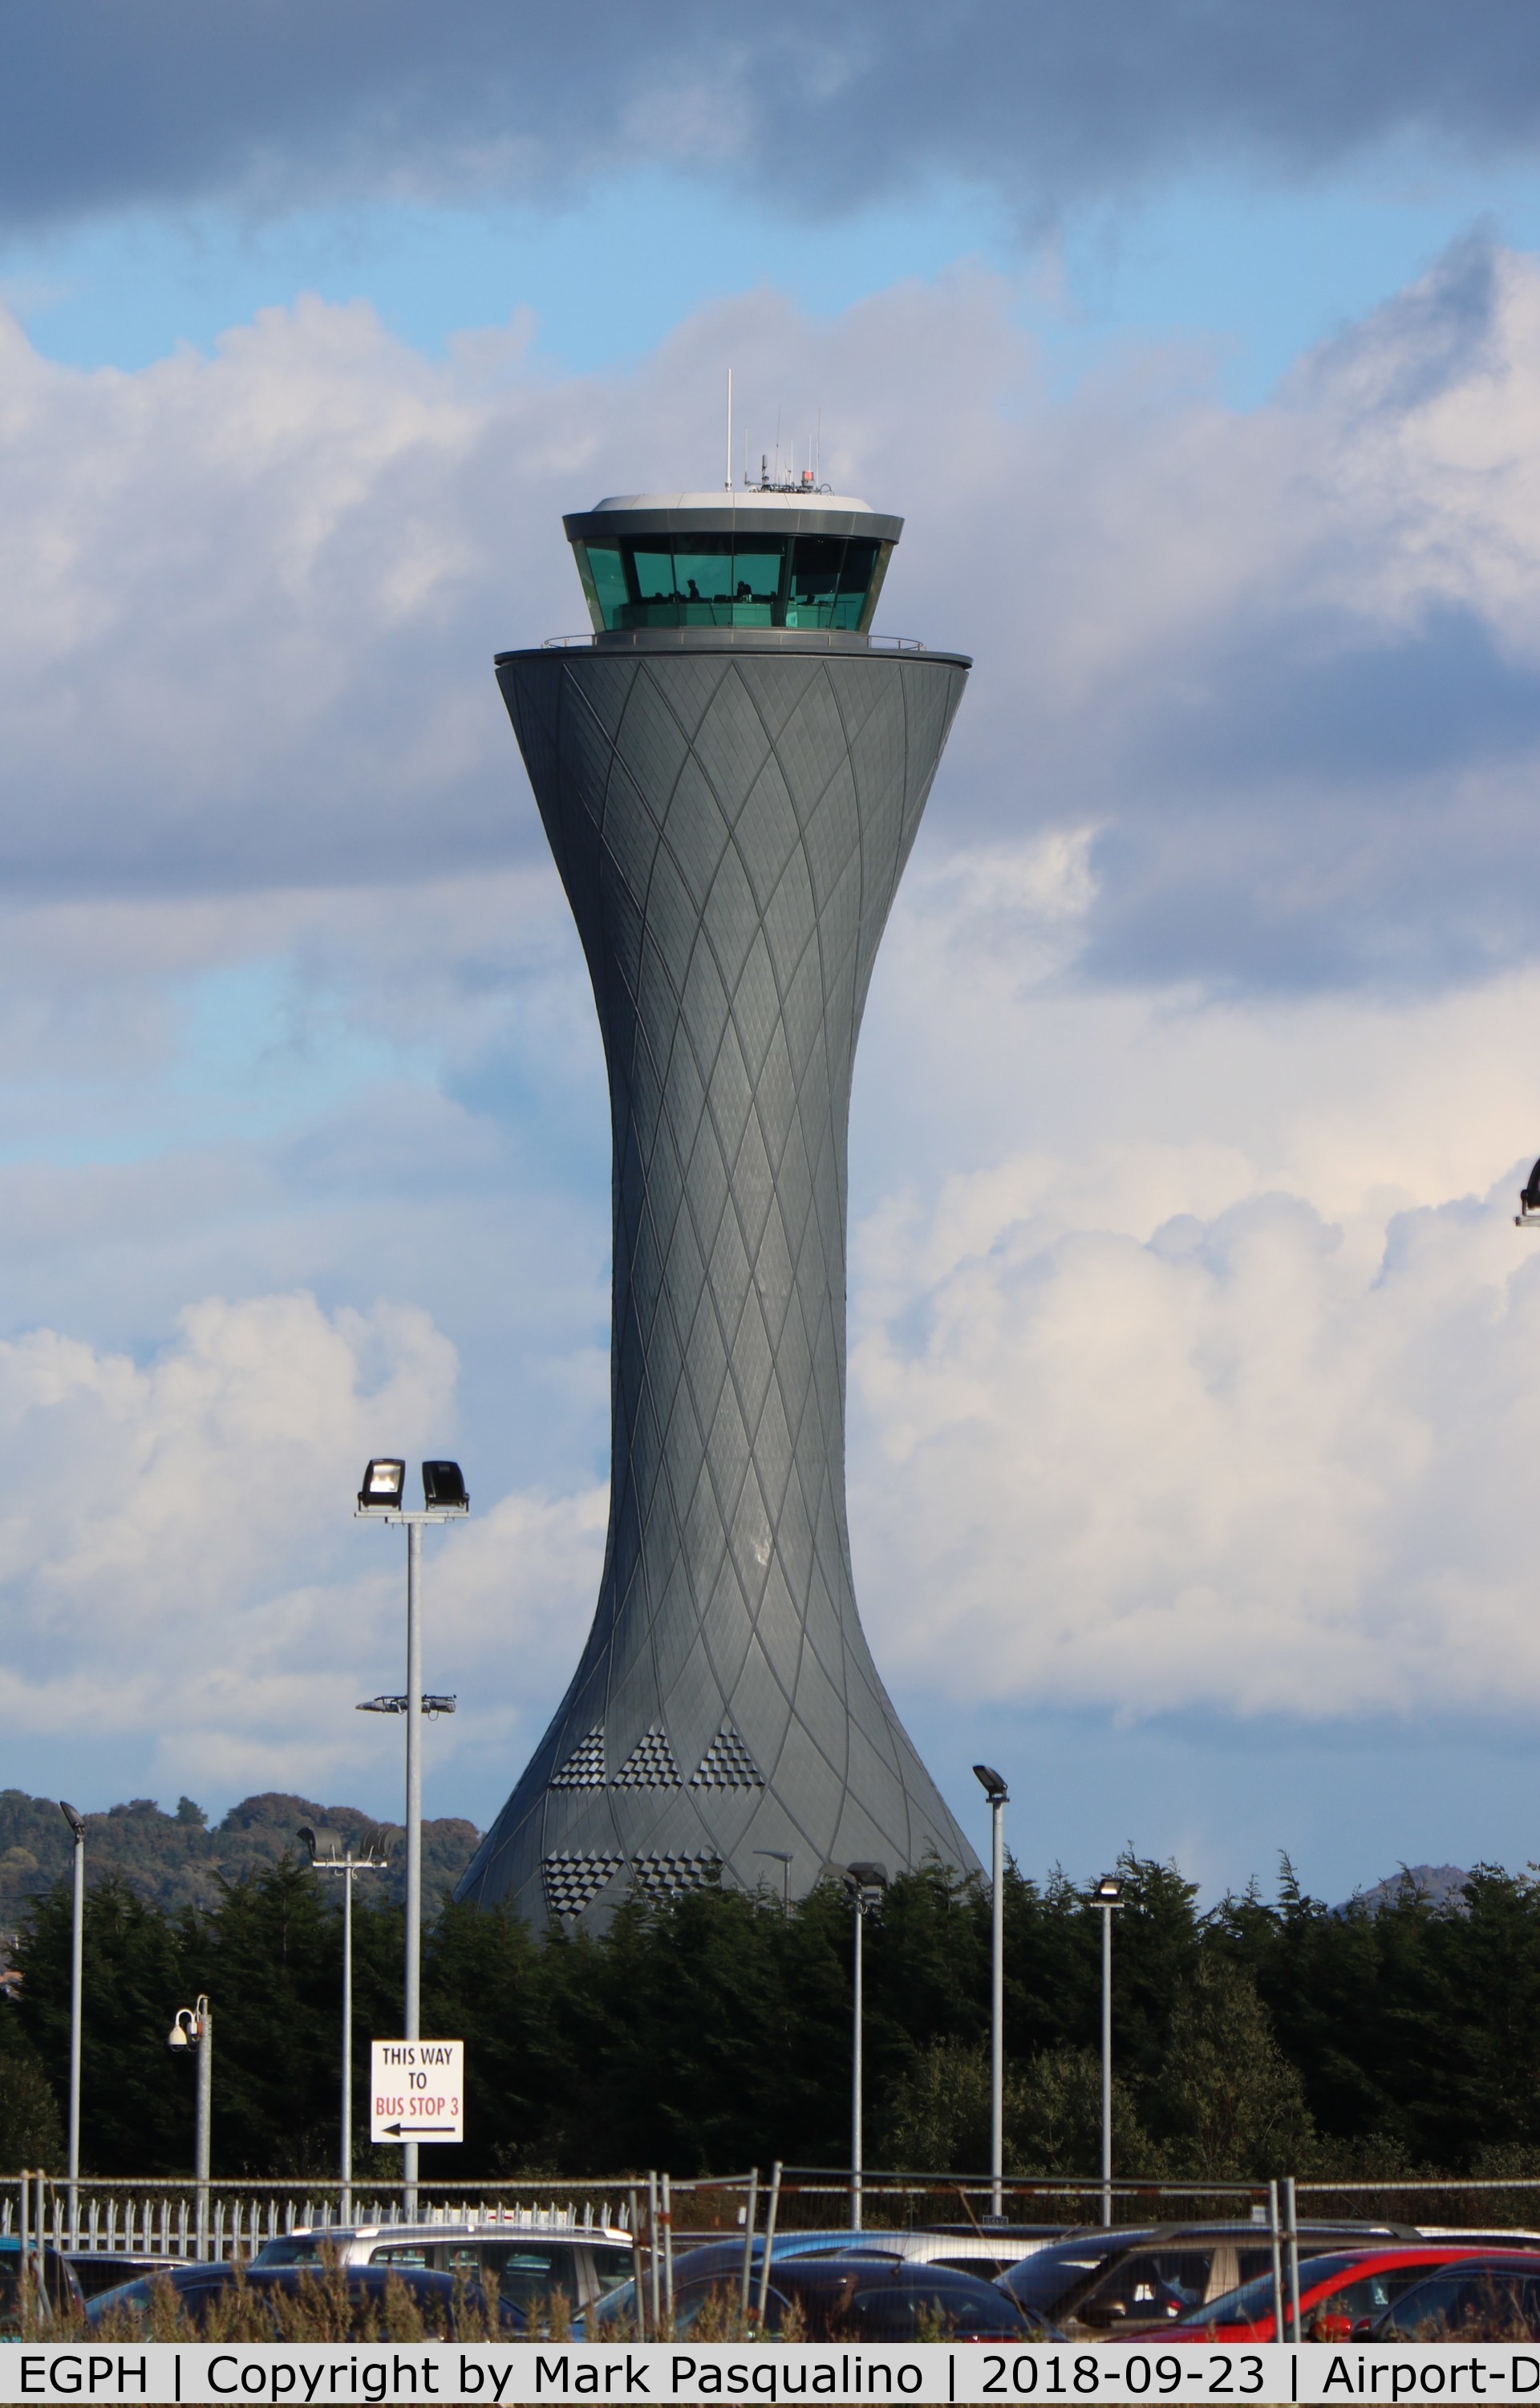 Edinburgh Airport, Edinburgh, Scotland United Kingdom (EGPH) - Control Tower